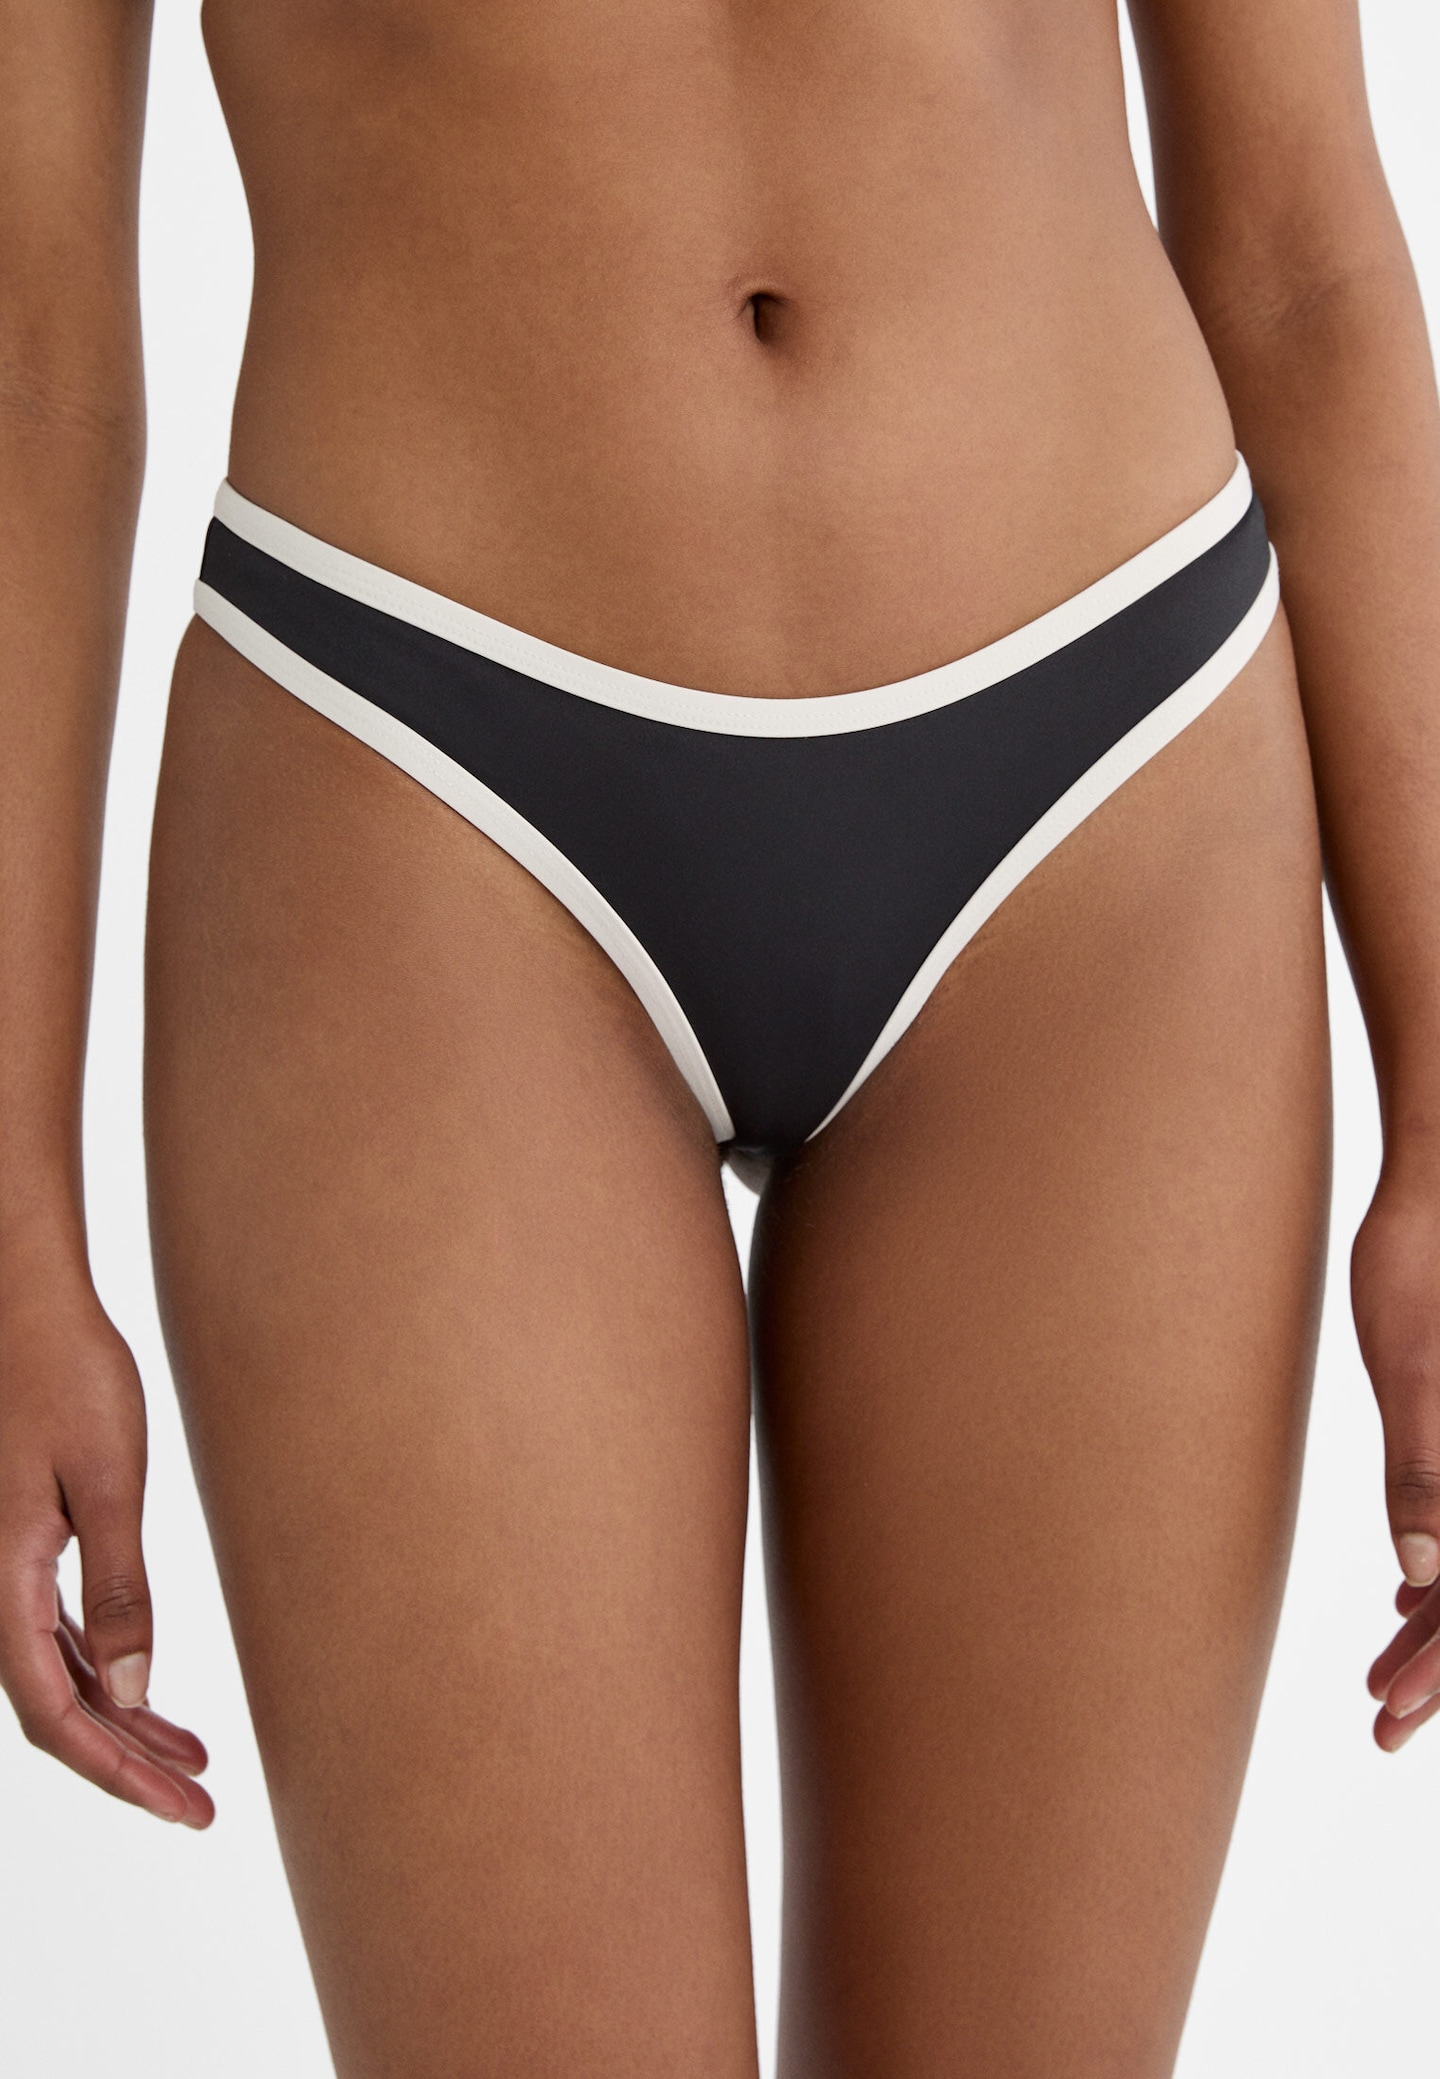 Contrast Brazilian bikini bottoms - Women's Bikinis & Swimwear | Stradivarius United Kingdom